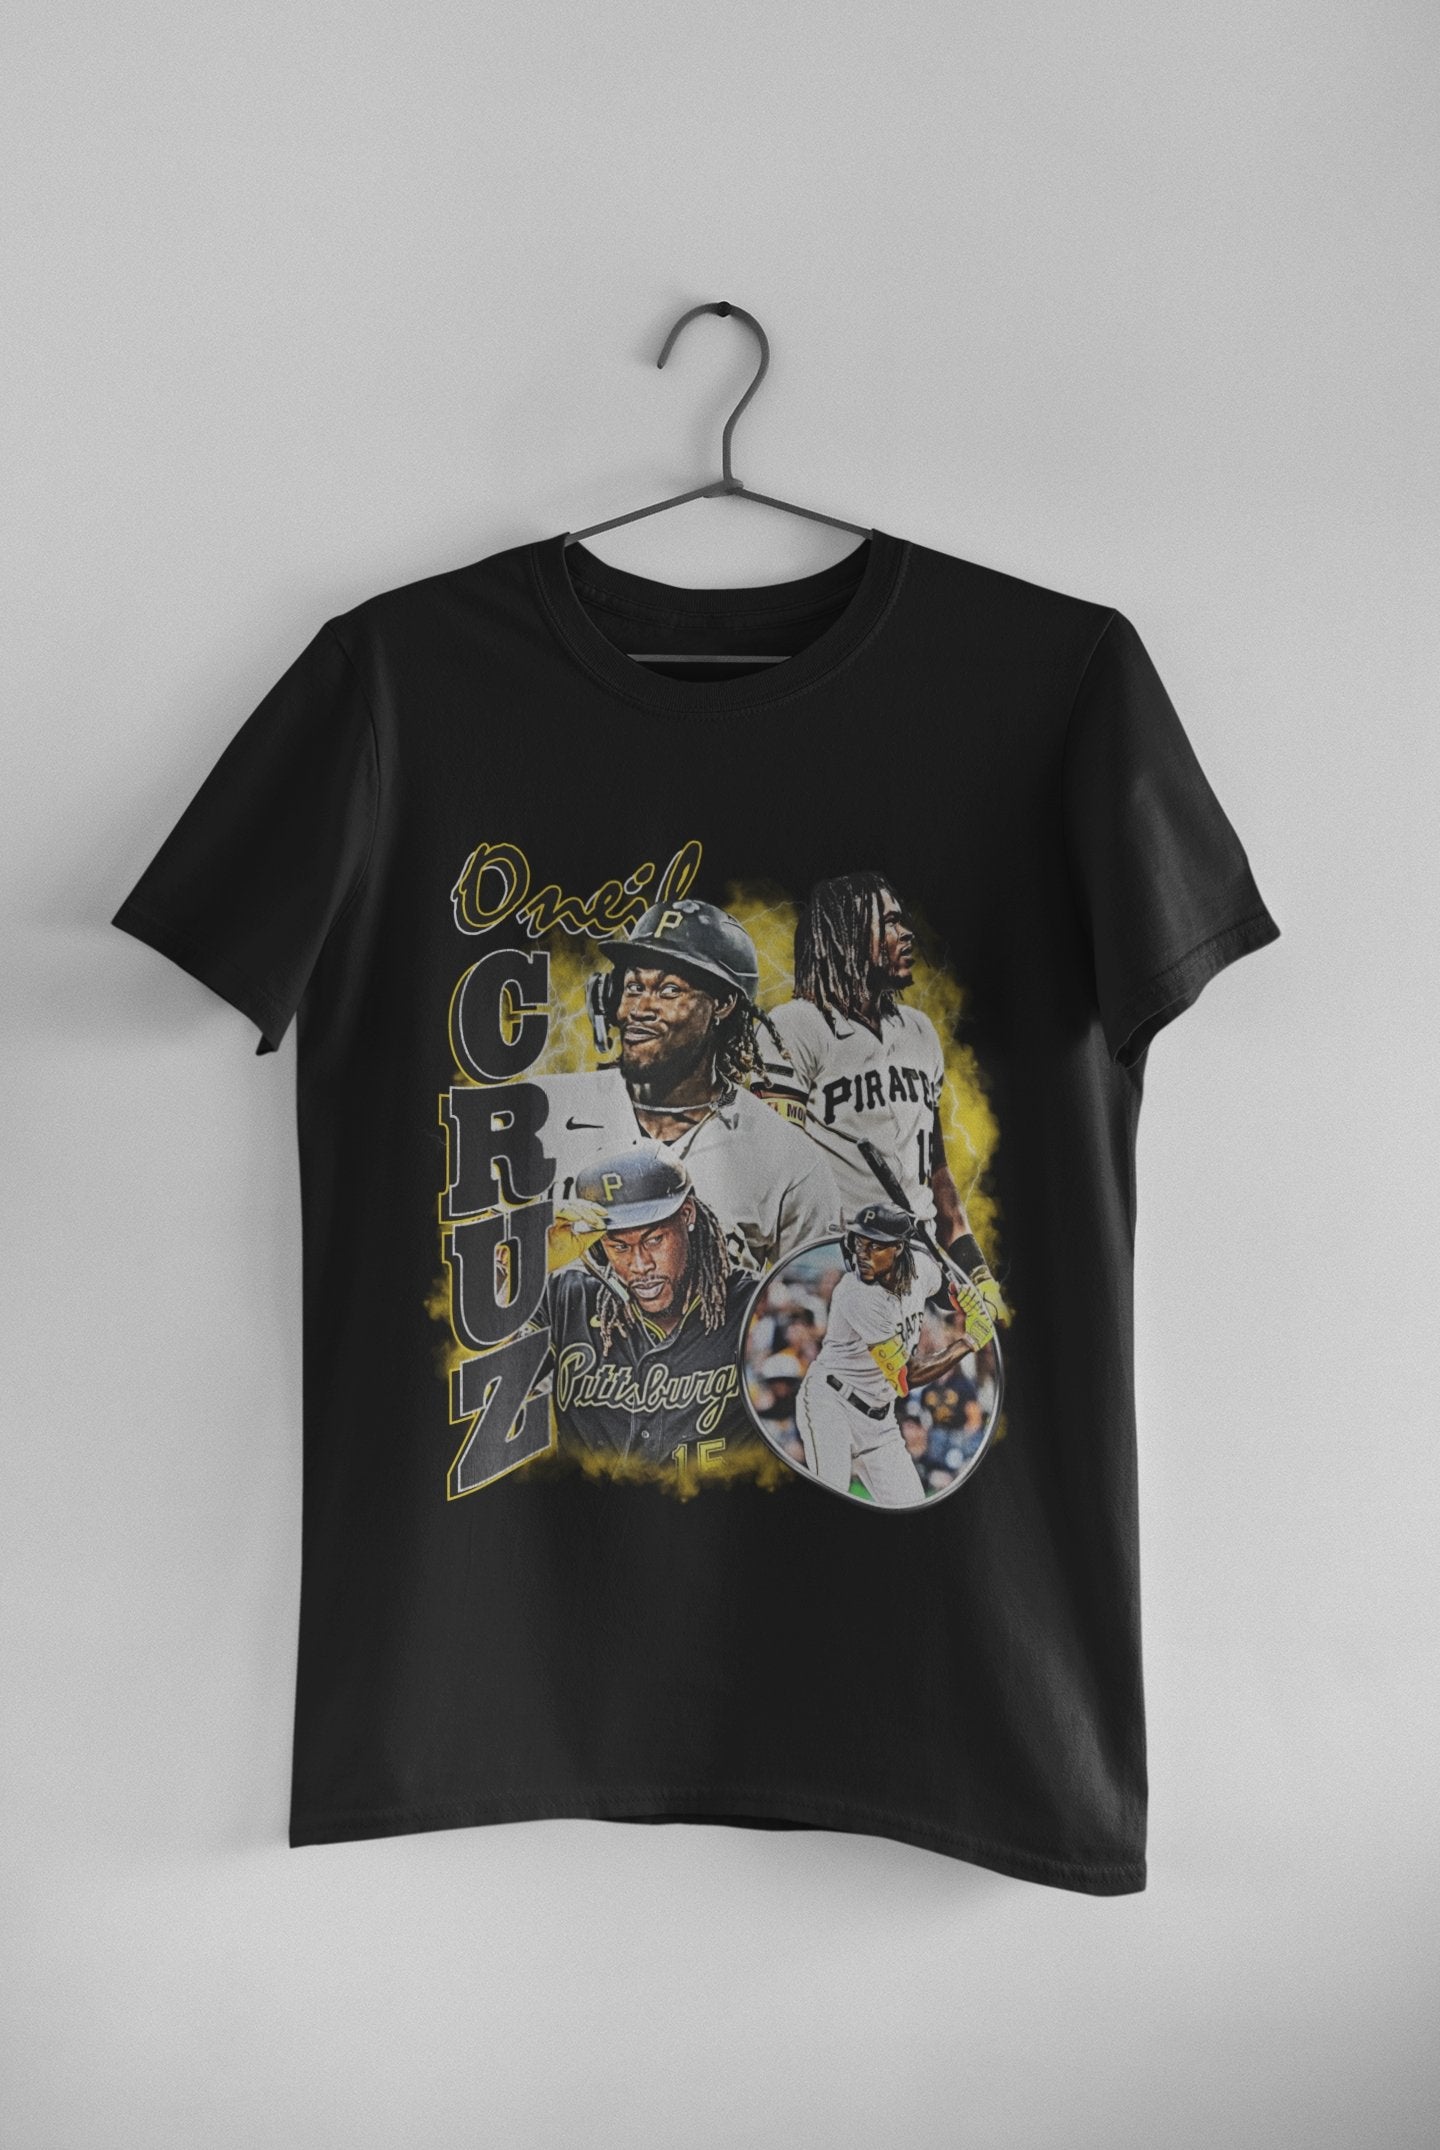 Oneil Cruz - Unisex t-shirt – Modern Vintage Apparel